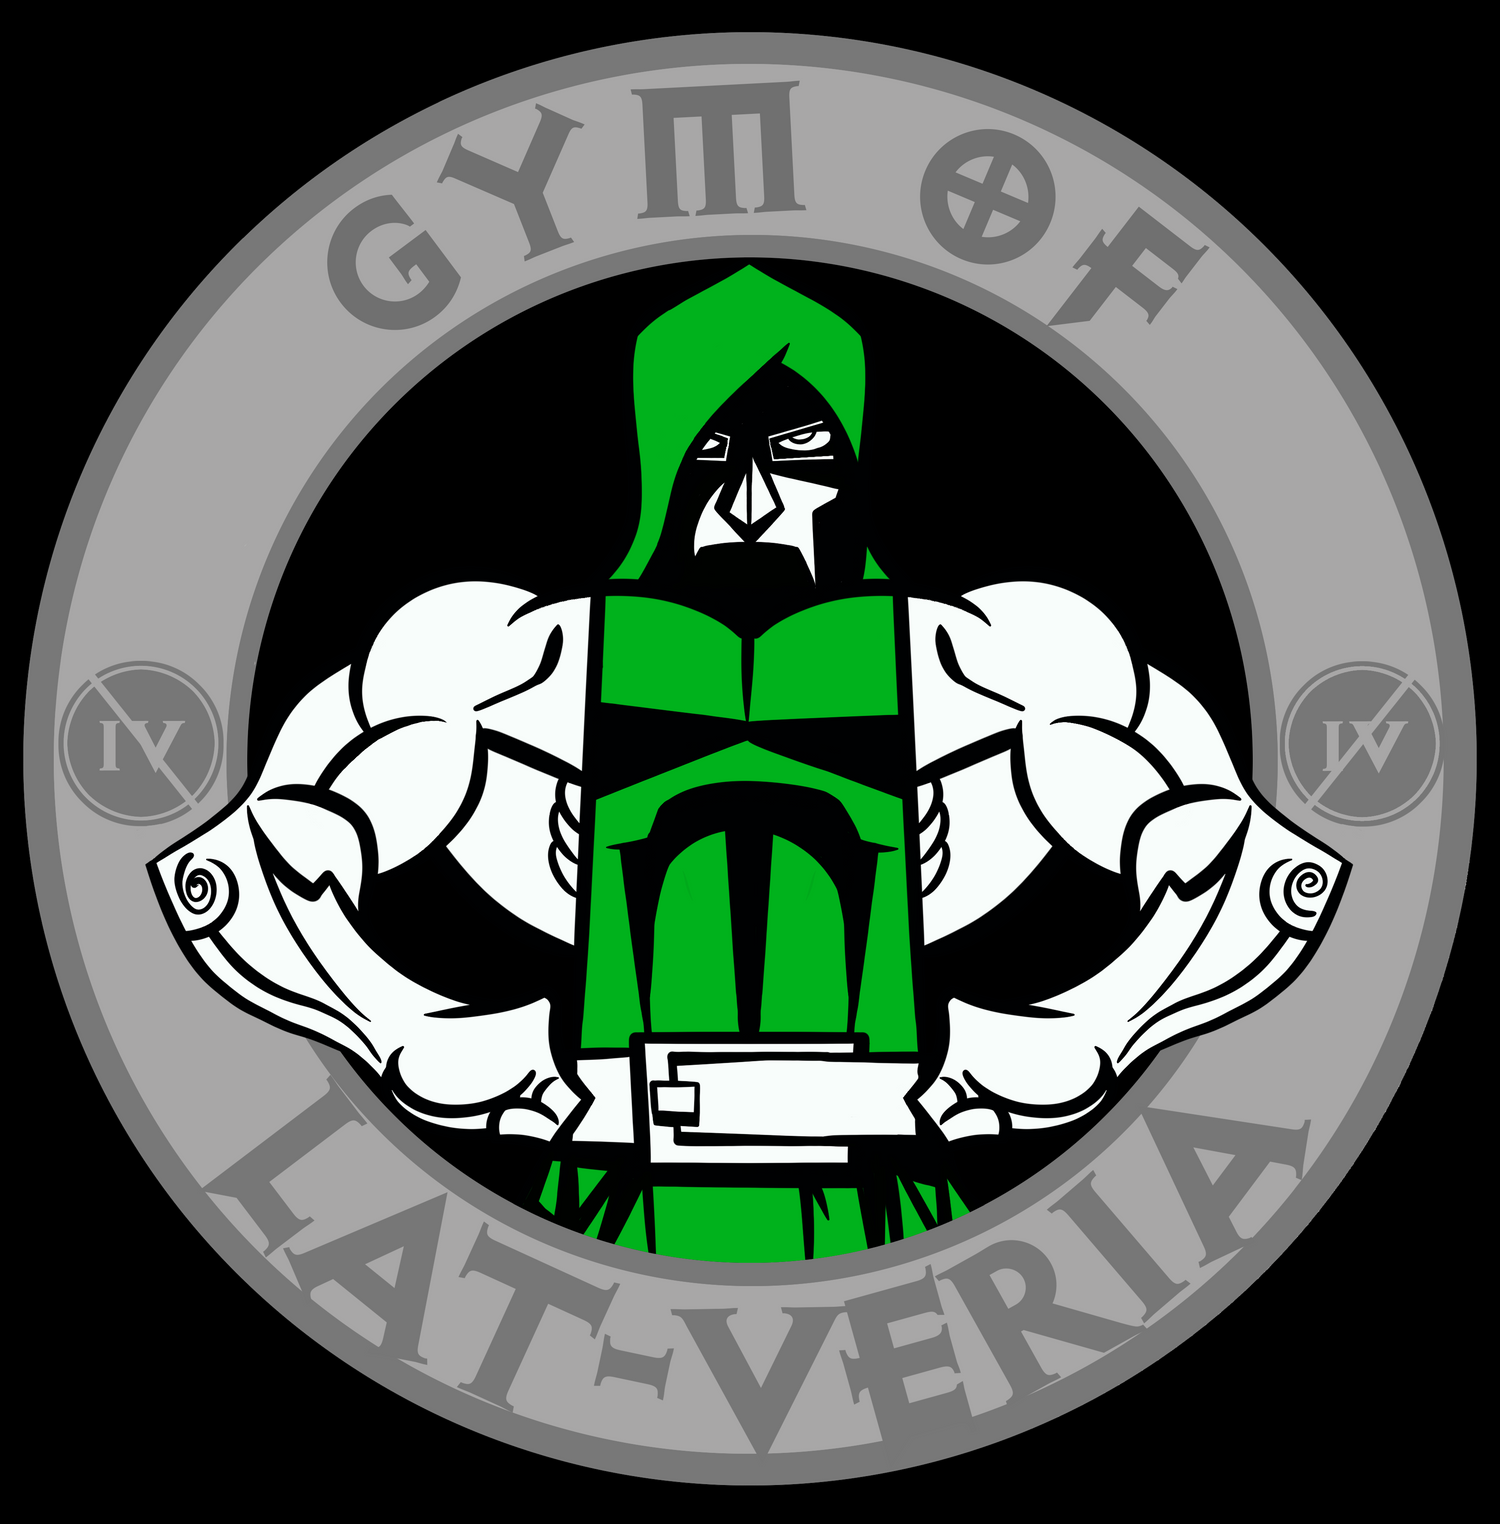 Gym Of Lat-Veria